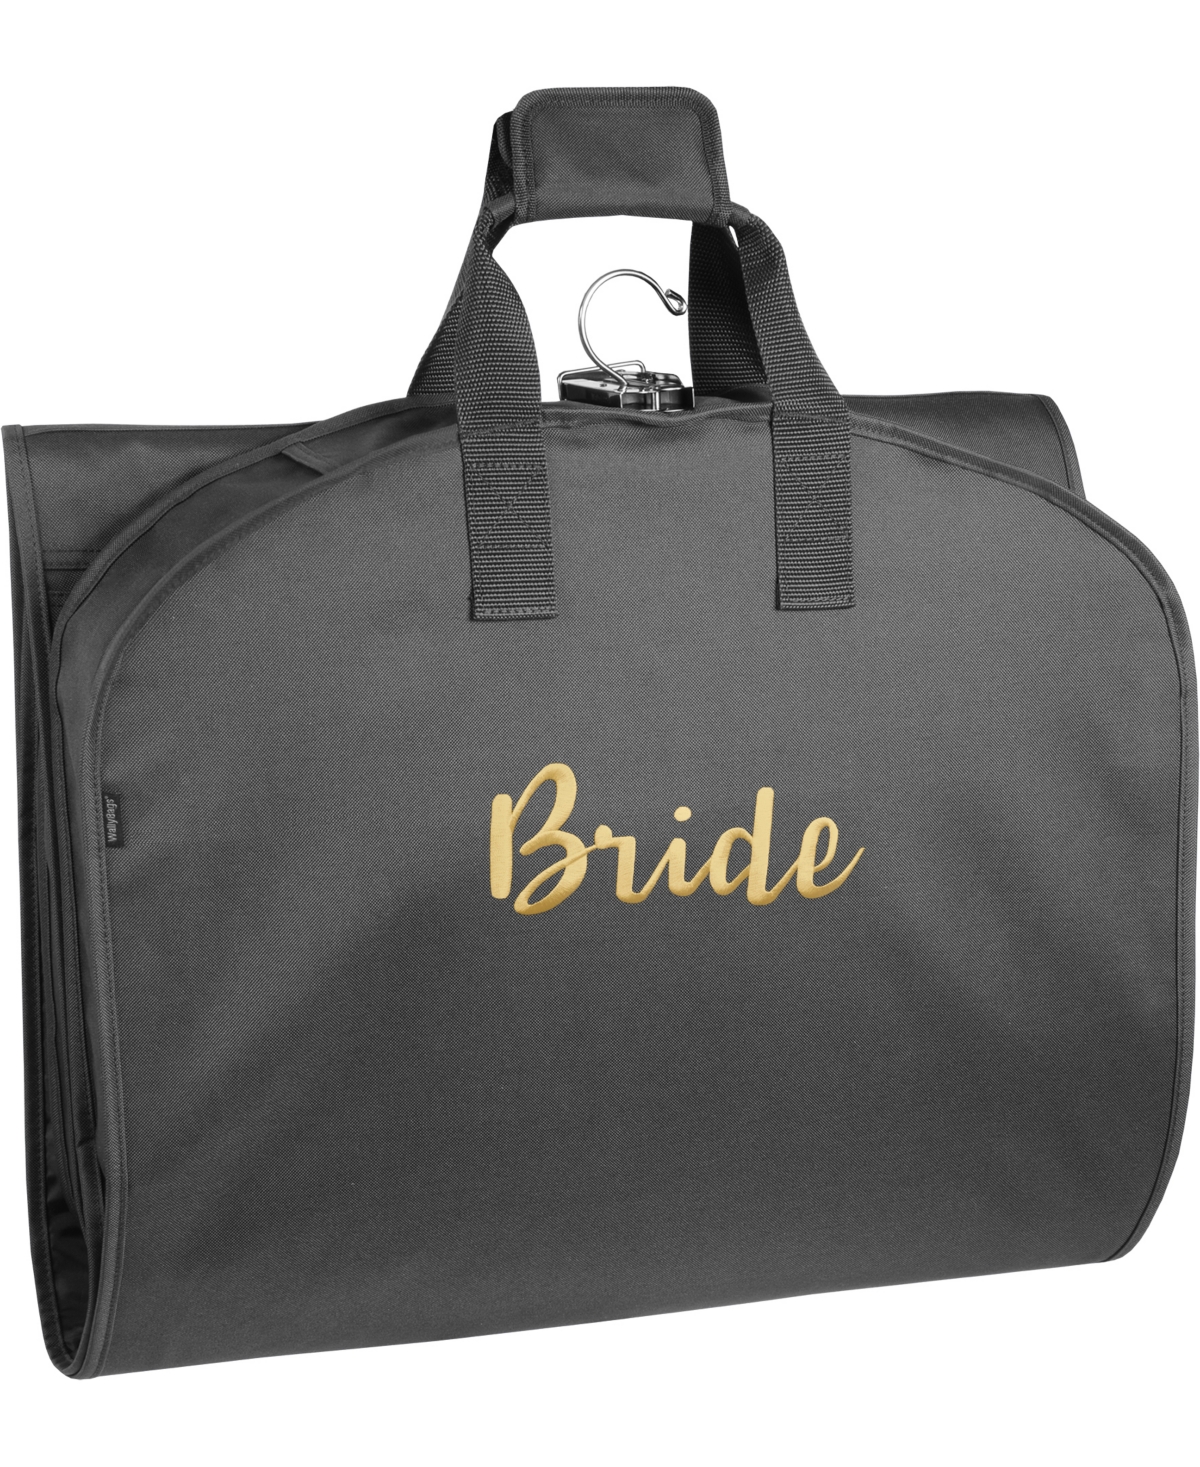 60" Premium Tri-Fold Travel Garment Bag with Pocket and Bride Embroidery - Black - B Rose